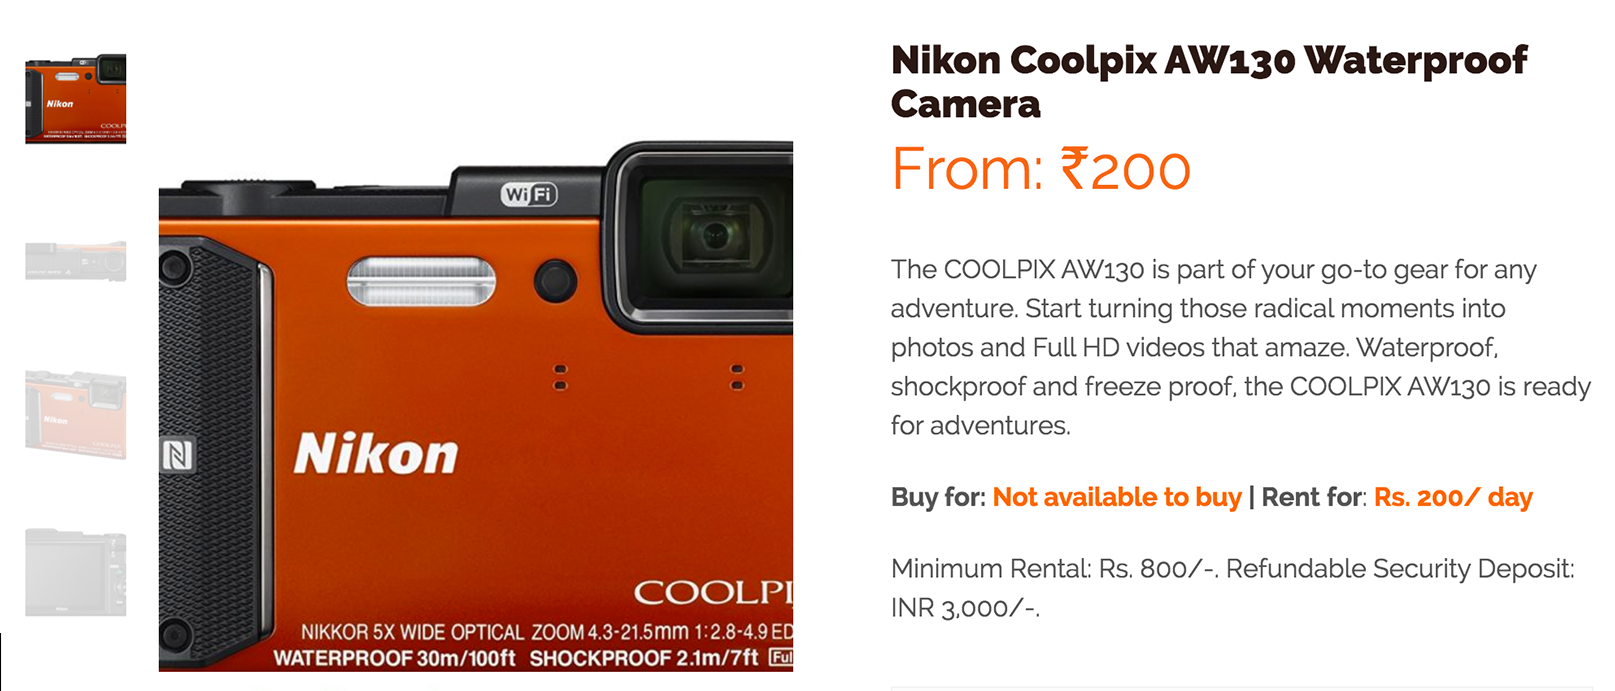 Nikon Coolpix AW130 Waterproof Camera